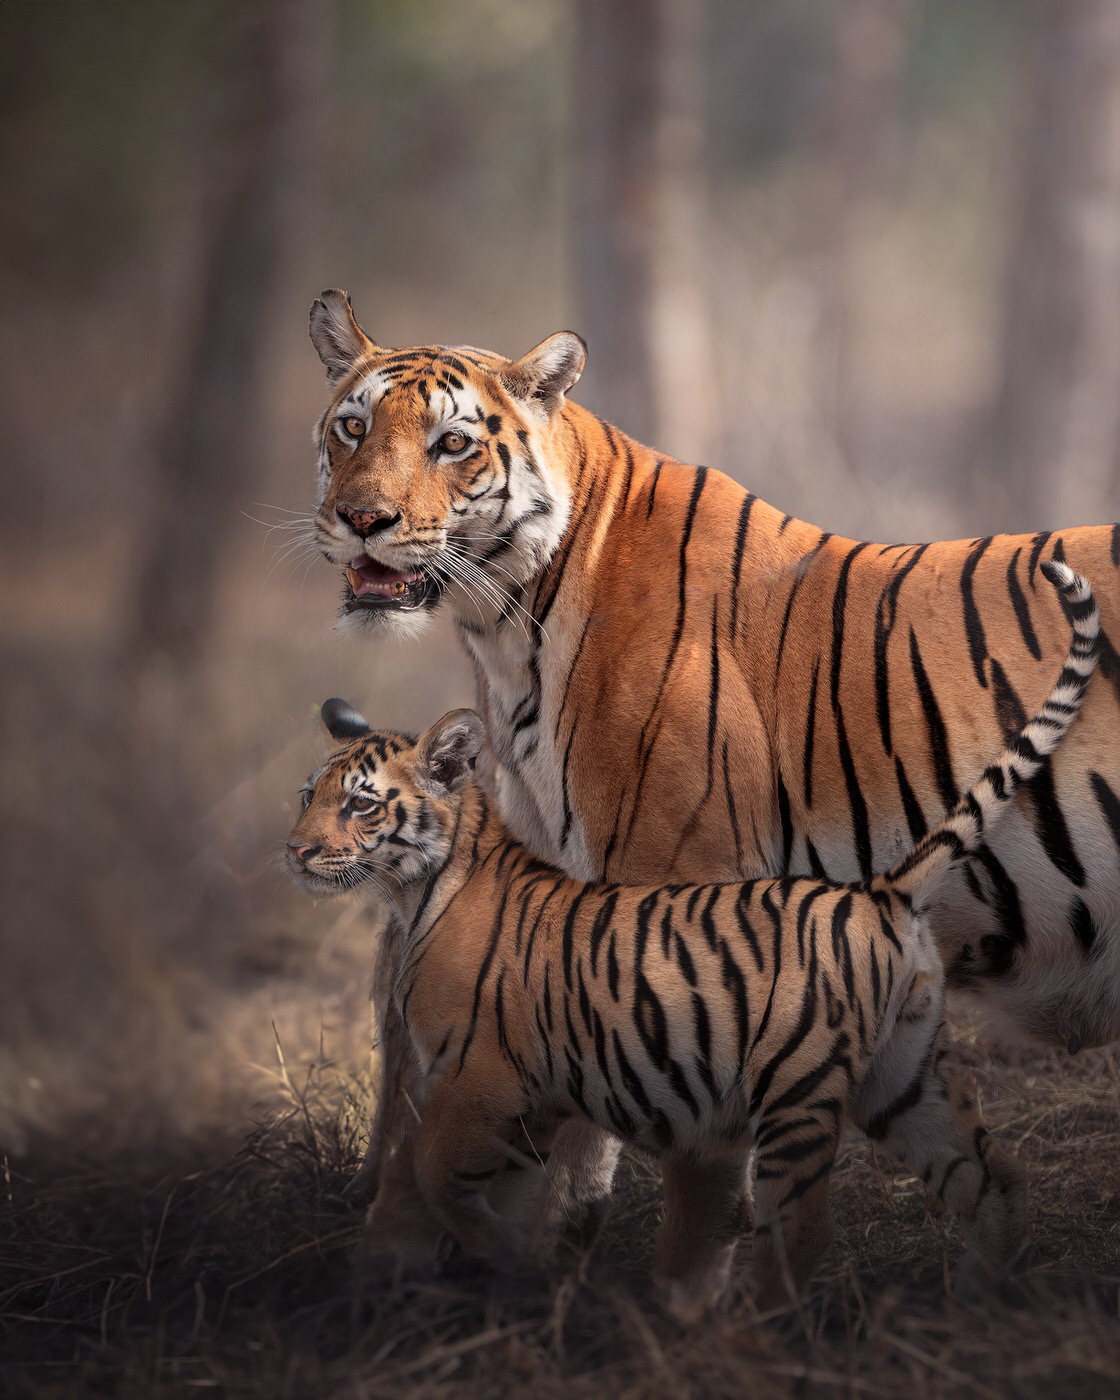 Tiger expedition - Viaggio fotografico in india - photographic tour india